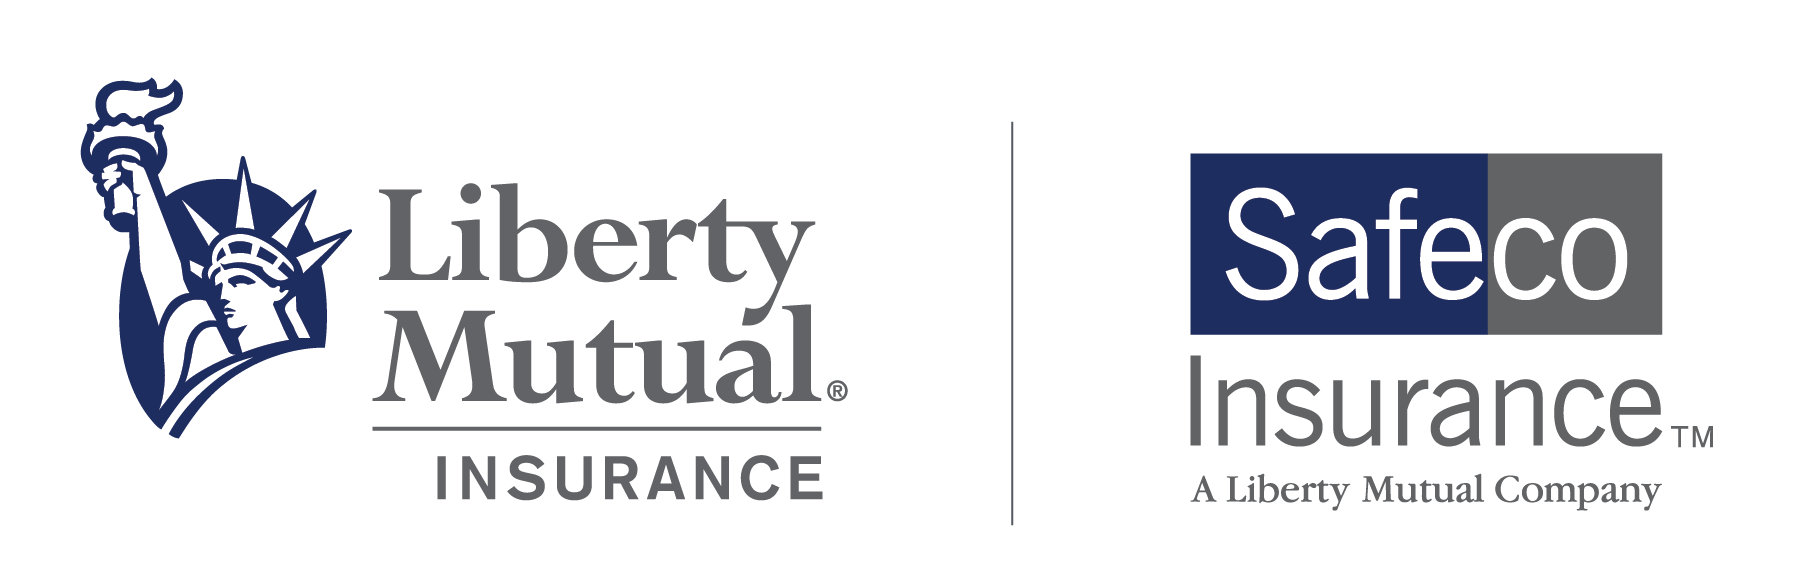 Liberty Mutual Company Logo - Index of /wp-content/uploads/2017/05